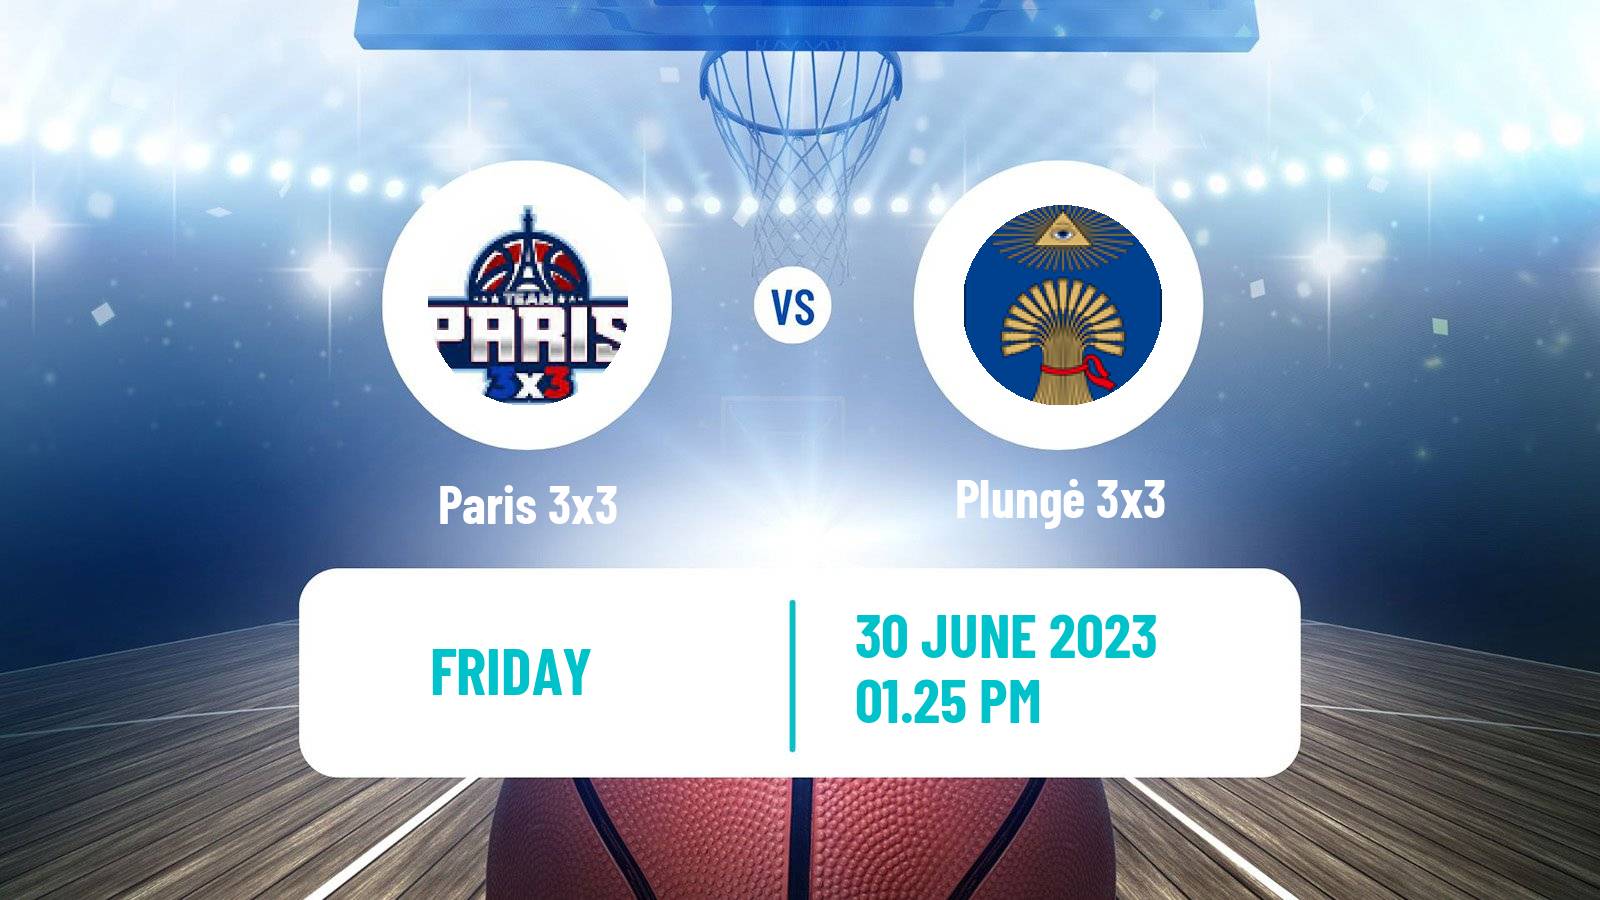 Basketball World Tour Marseille 3x3 Paris 3x3 - Plungė 3x3